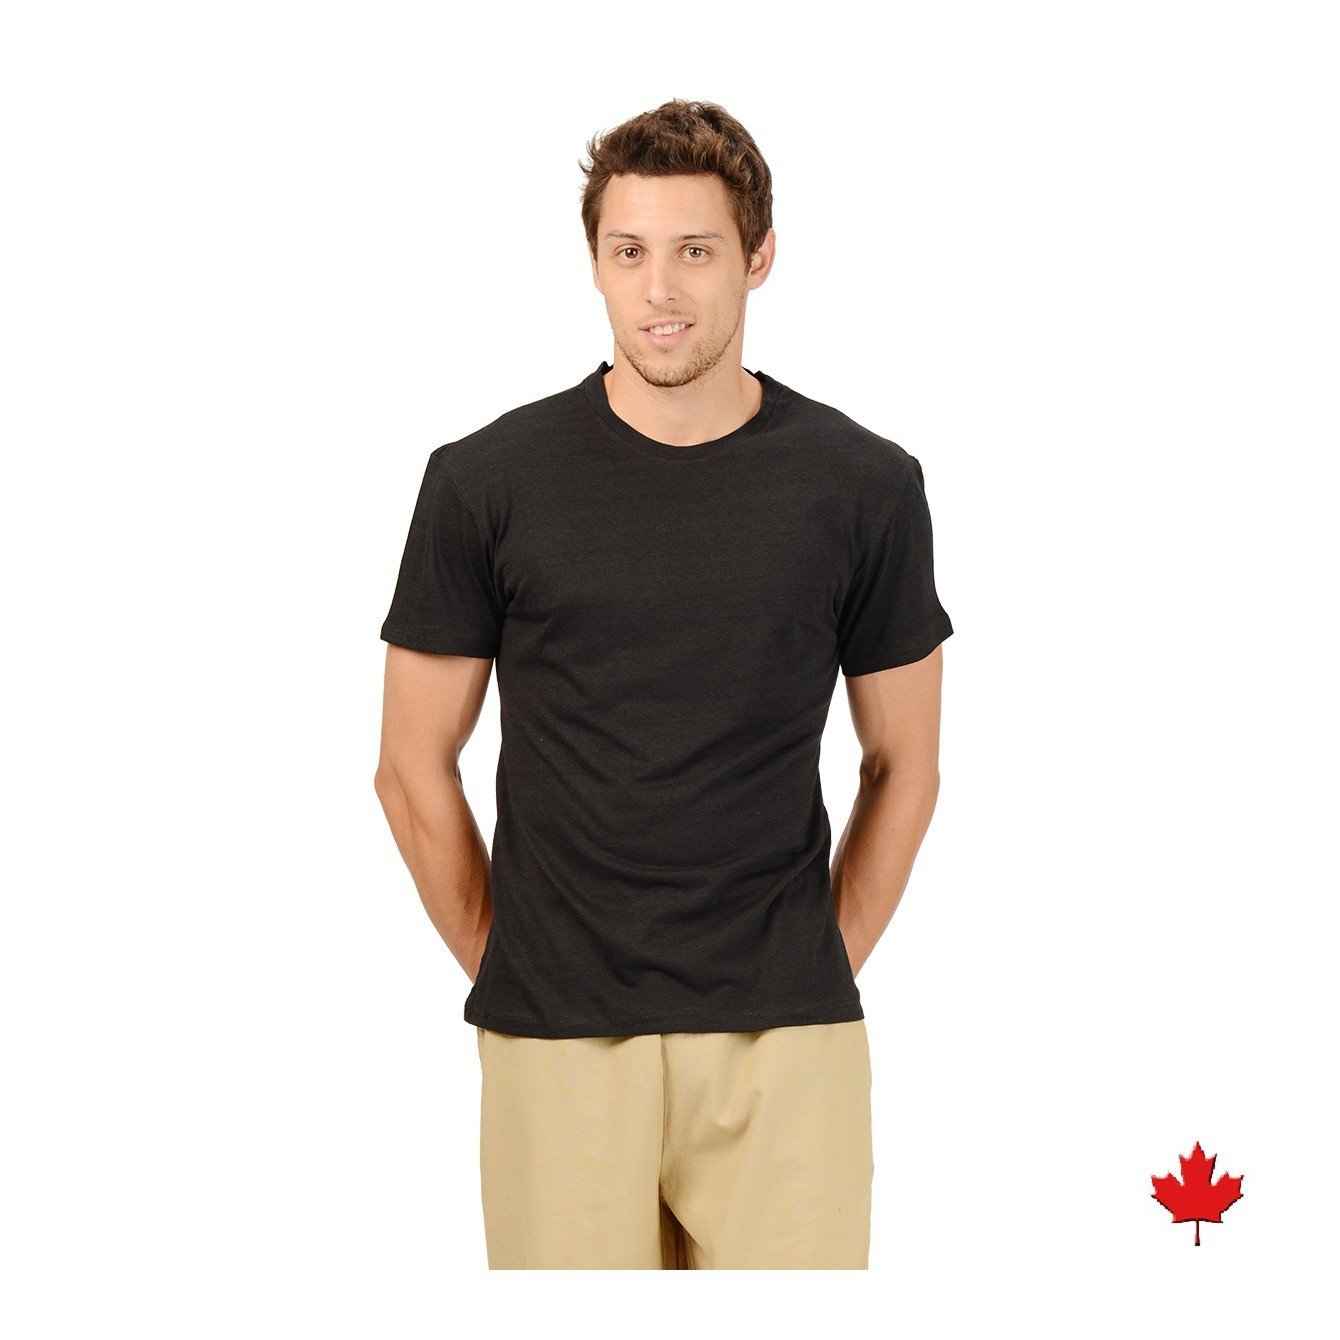 Urban Bamboo T-Shirt - Naturally Canada